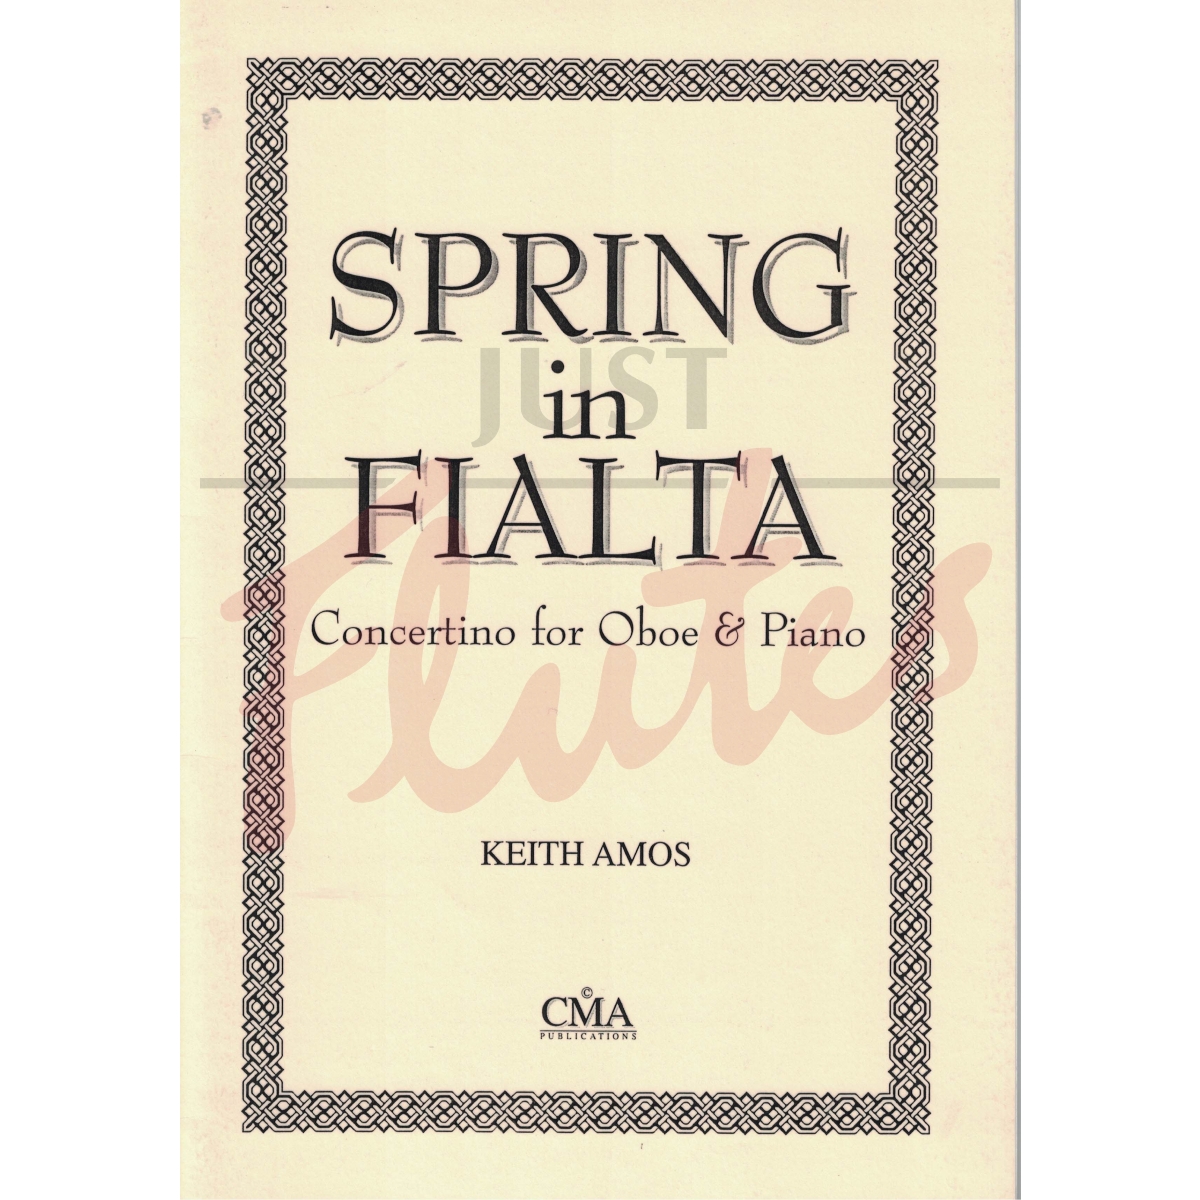 Spring in Fialta - Concertino for Oboe and Piano